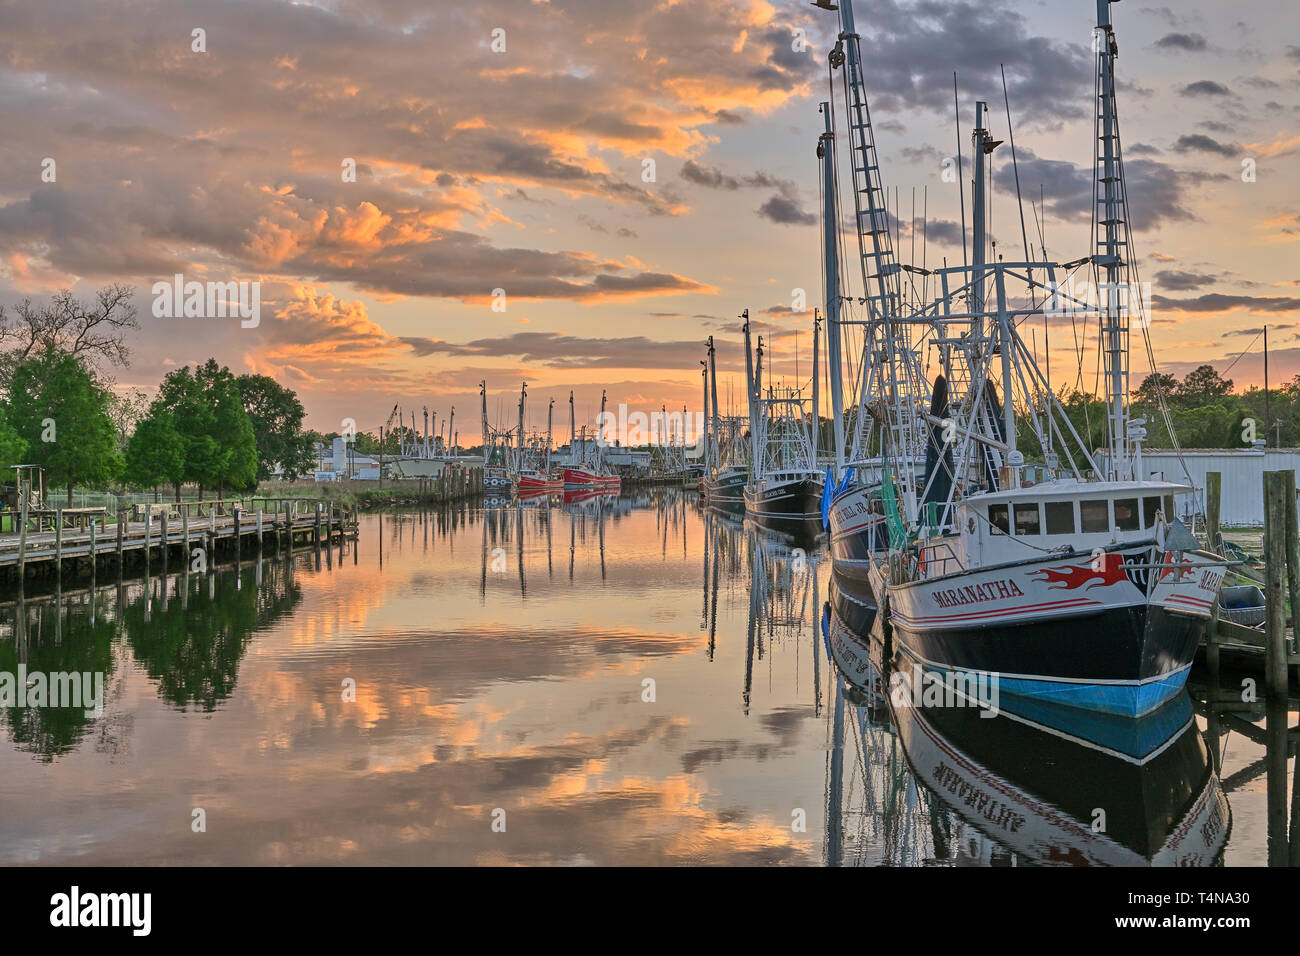 Commercial fishing boats and shrimp boats tied up at sunset in Bayou La Batre Alabama, USA. Stock Photo